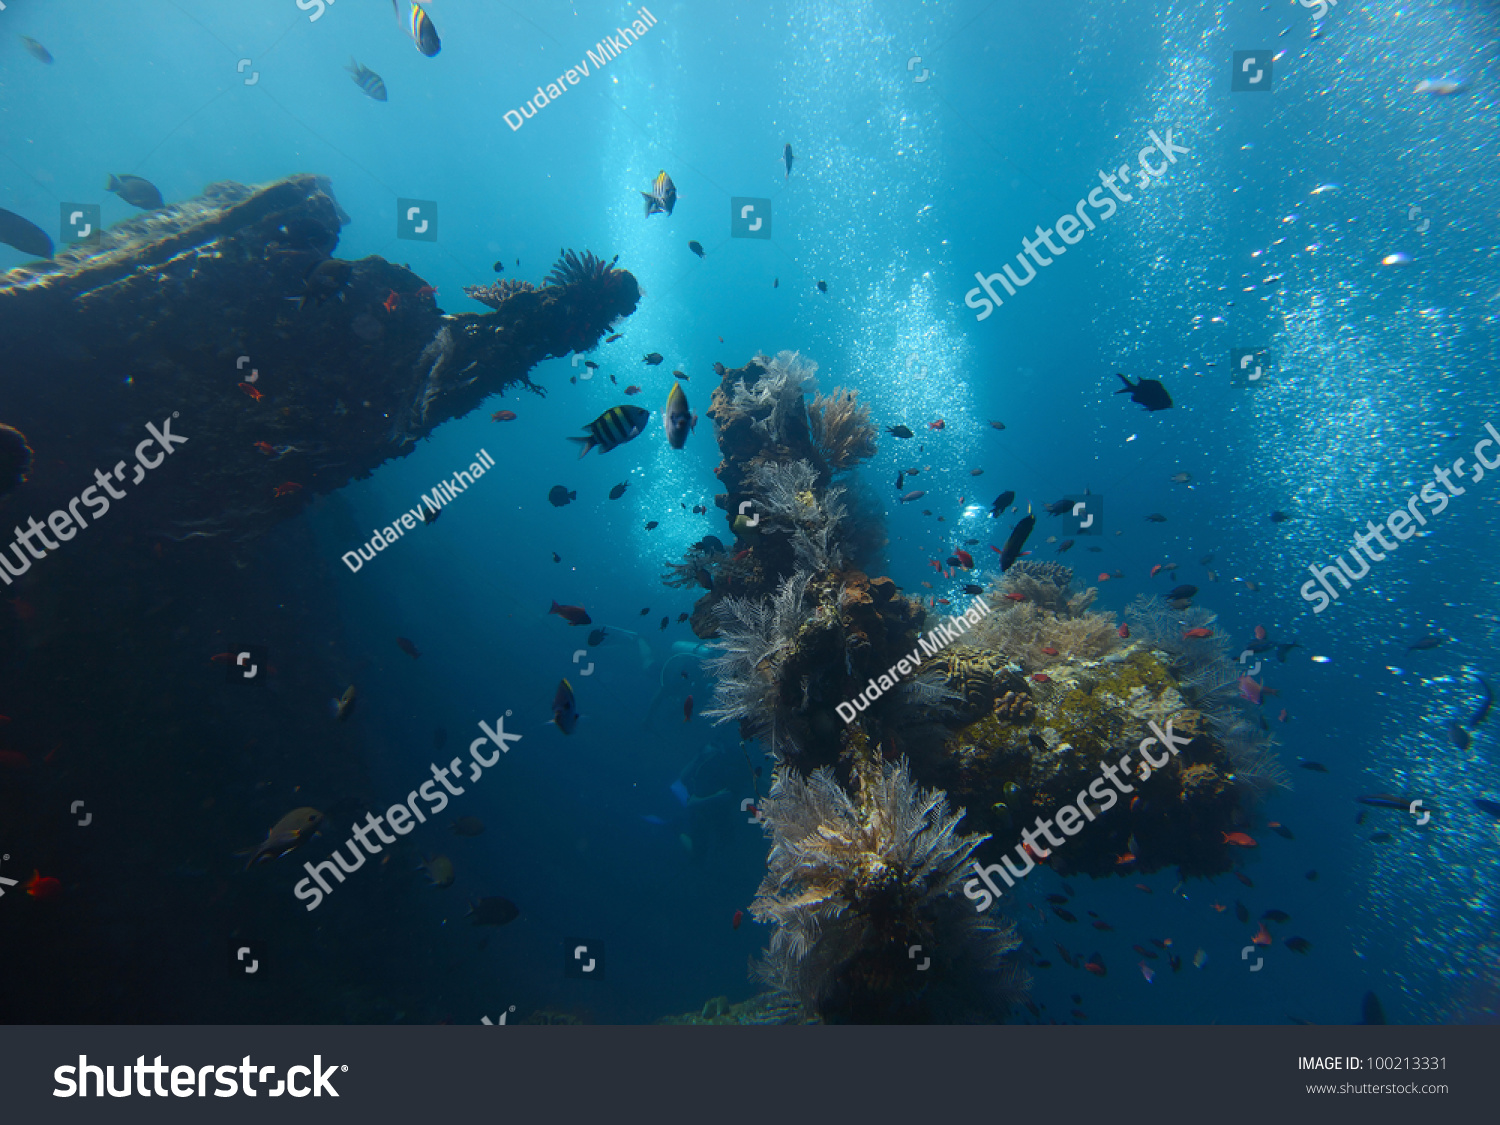 Shipwreck USAT Liberty (Tulamben, Indonesia) underwater shoot #100213331